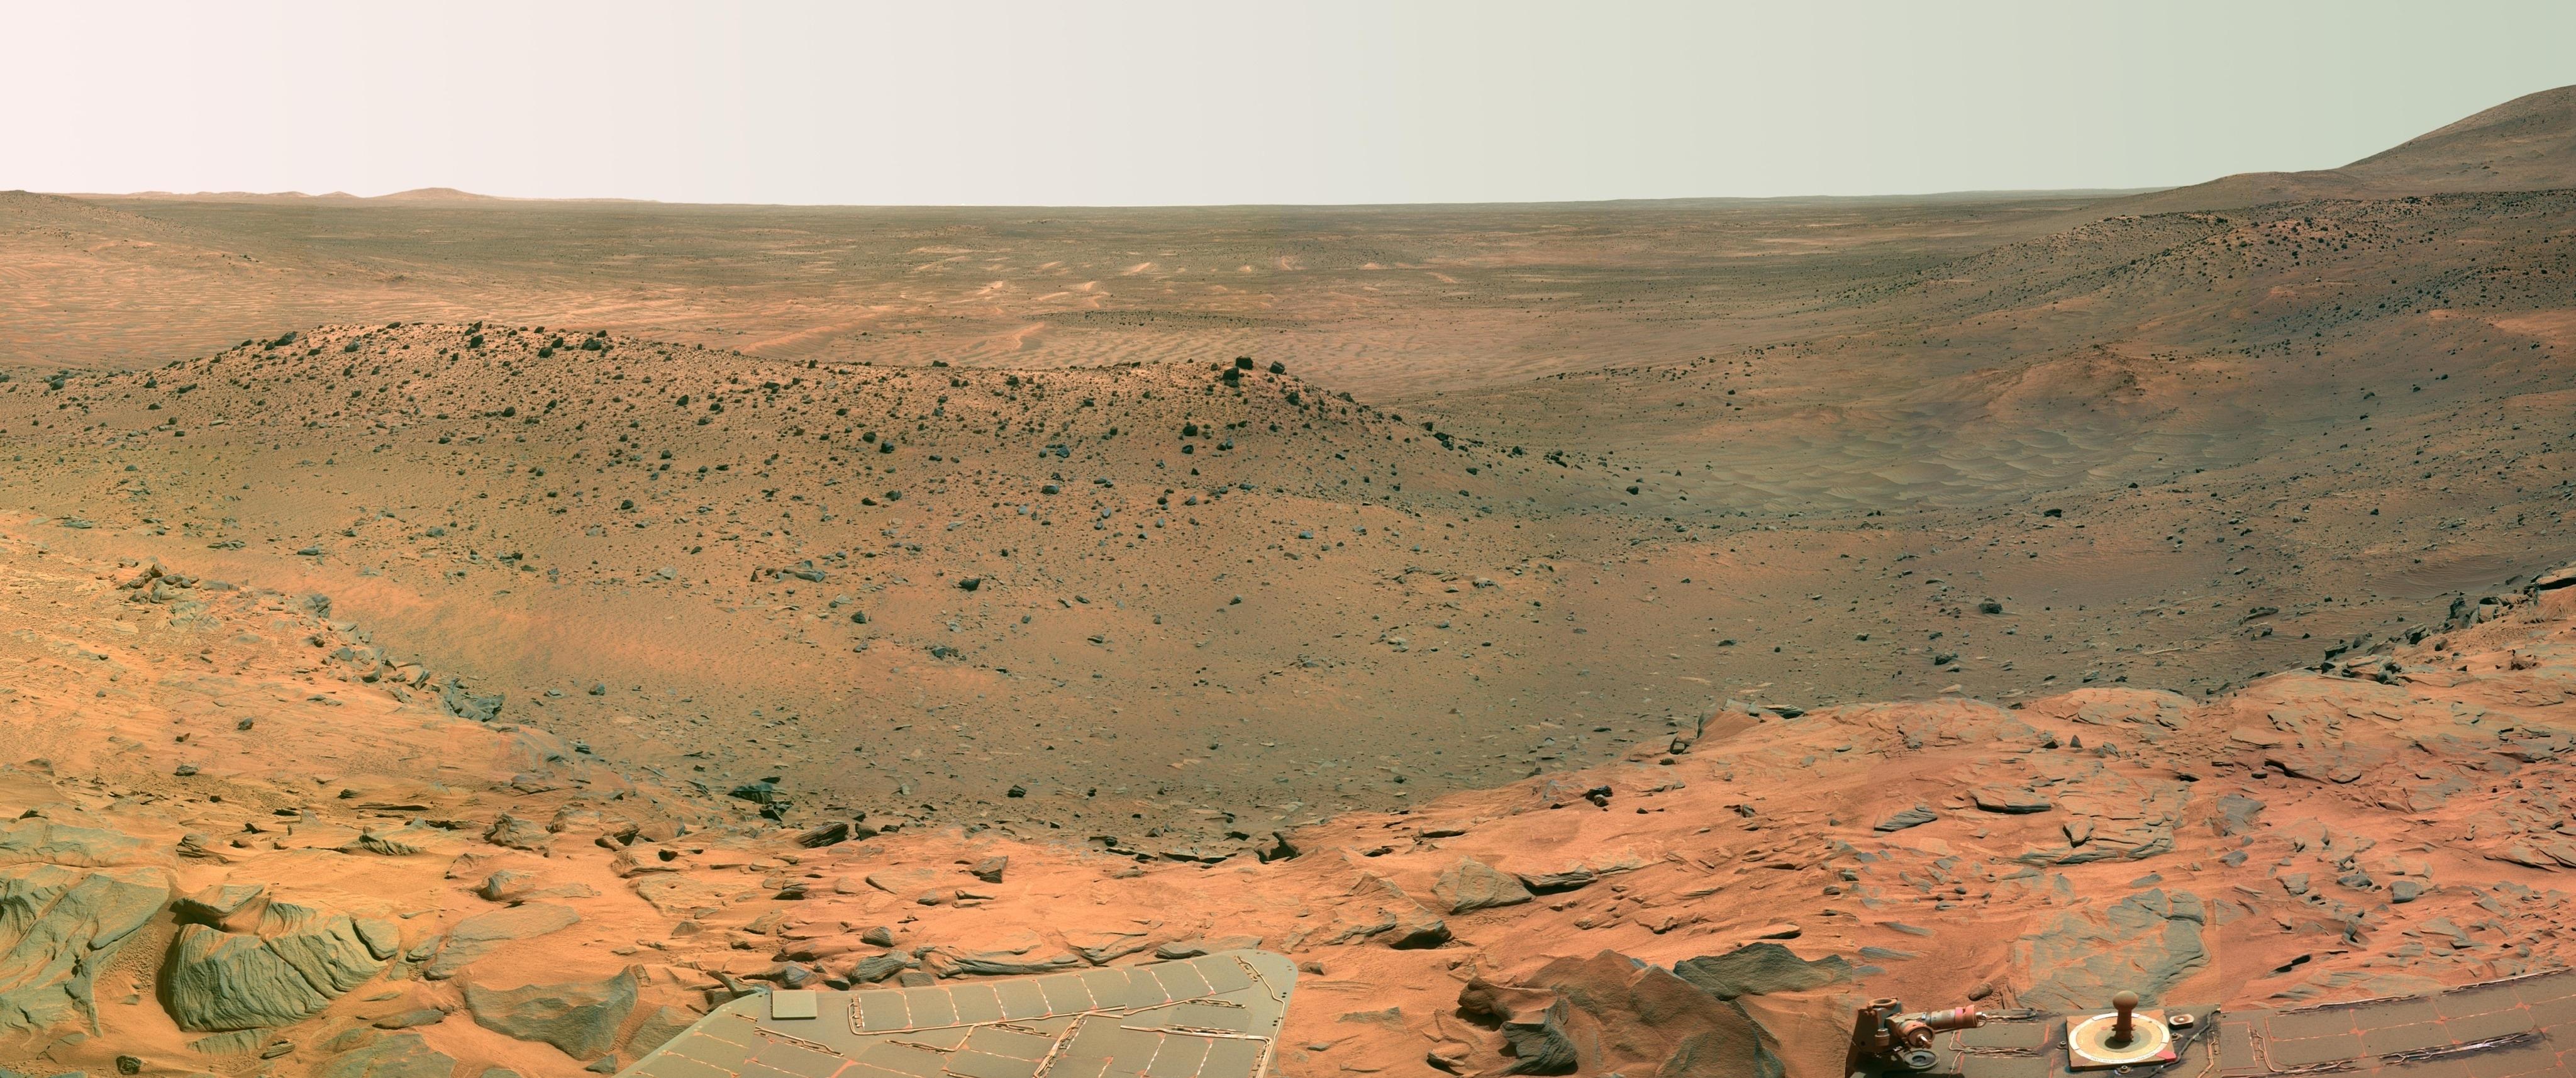 38+] NASA Mars Desktop Wallpapers